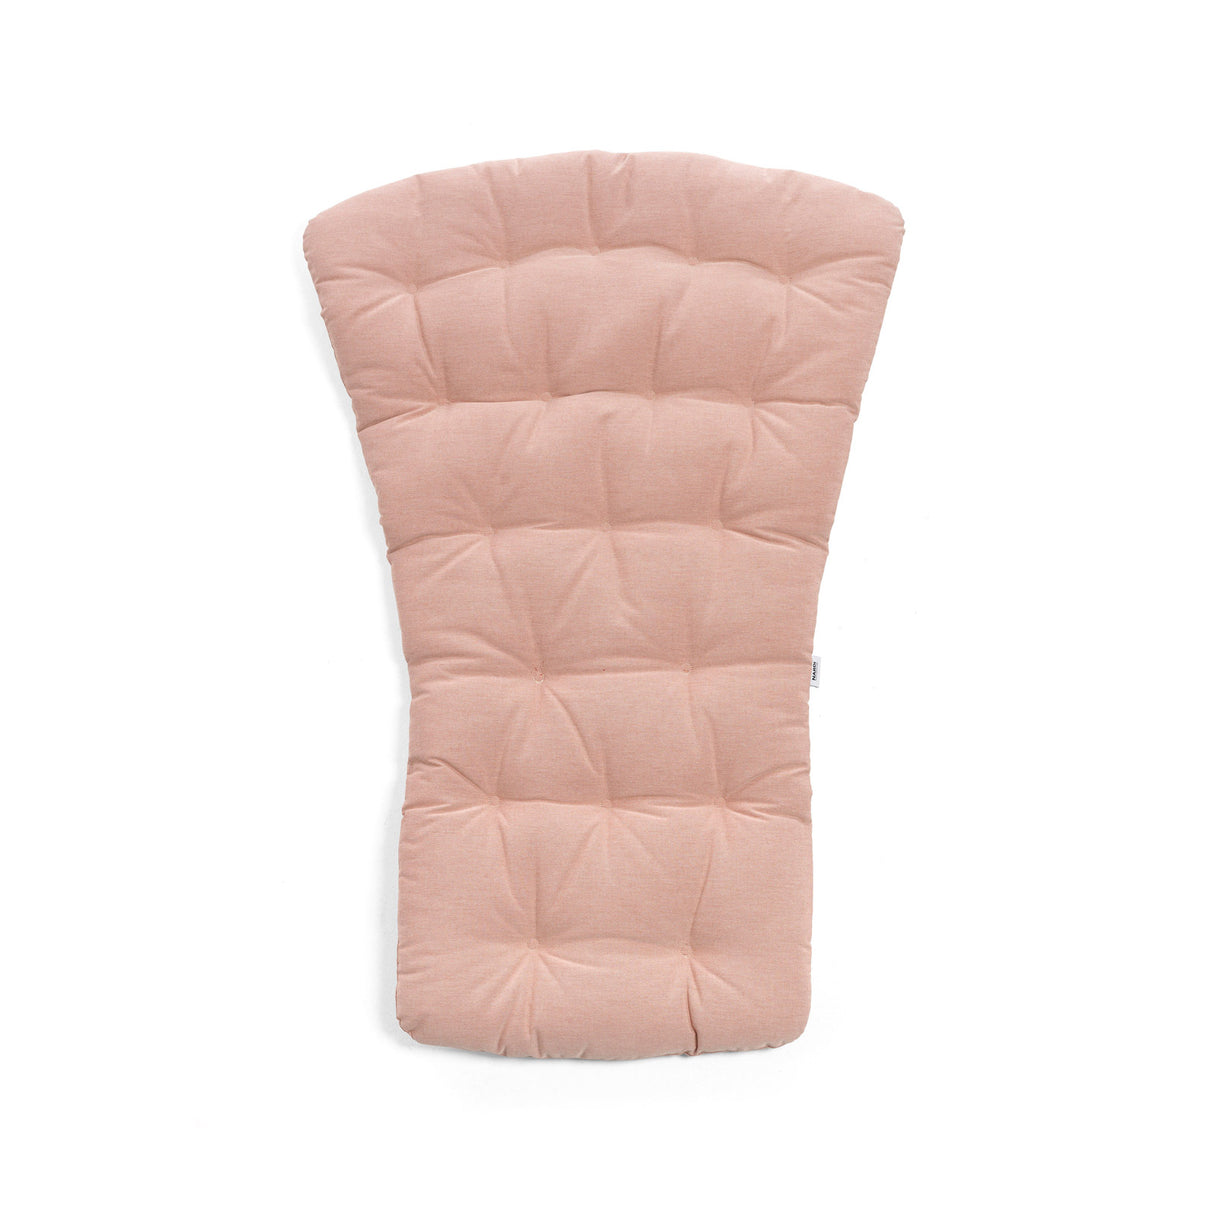 Pink Comfort Folio Cushion